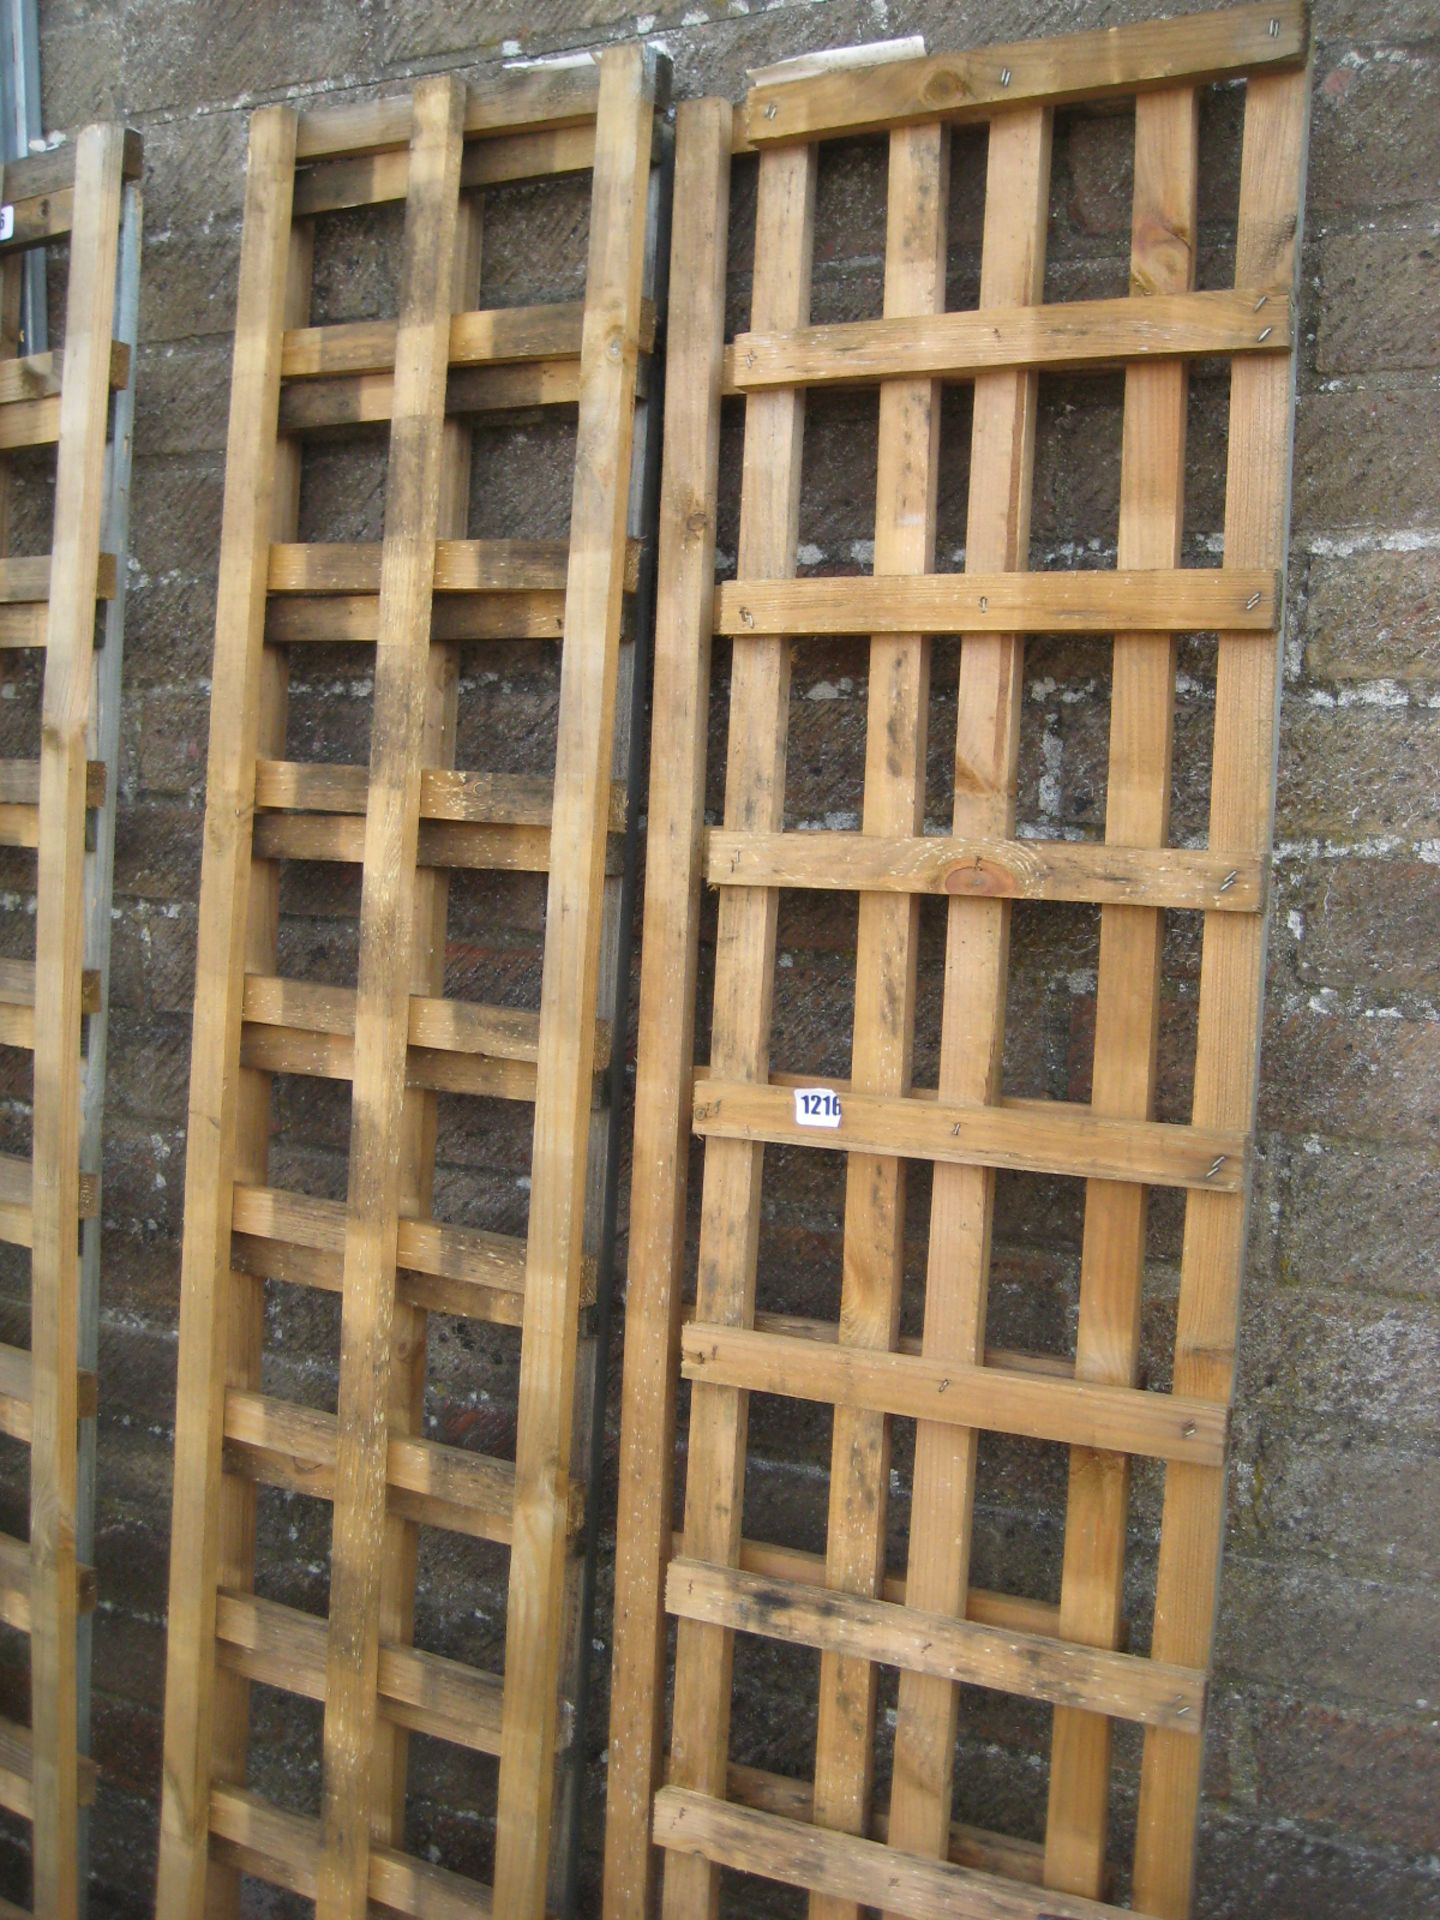 4 1'x6' single garden trellis panels